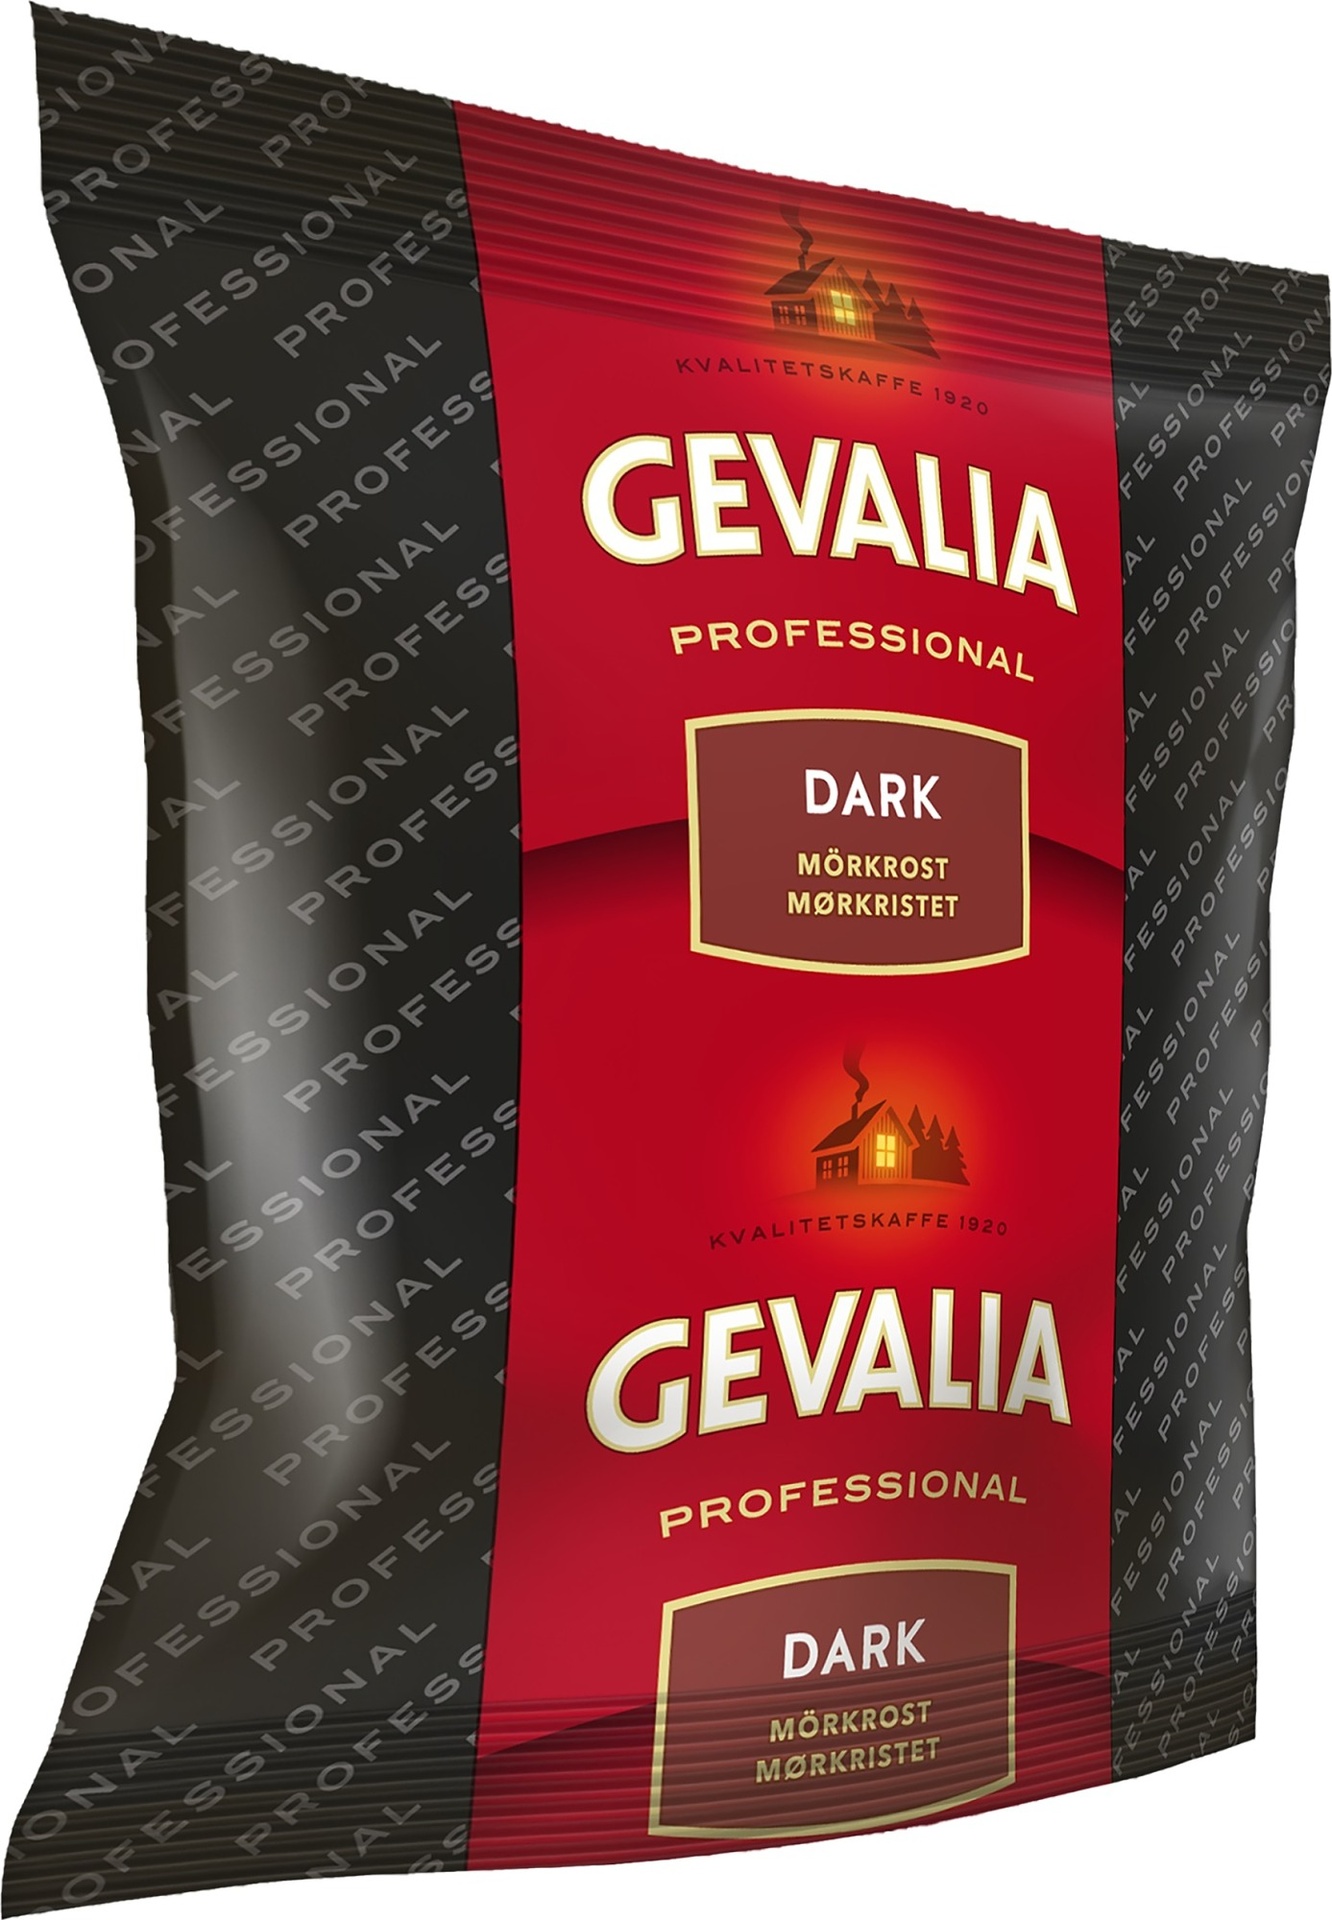 [8563630] Kaffe Gevalia extra mörk 125g